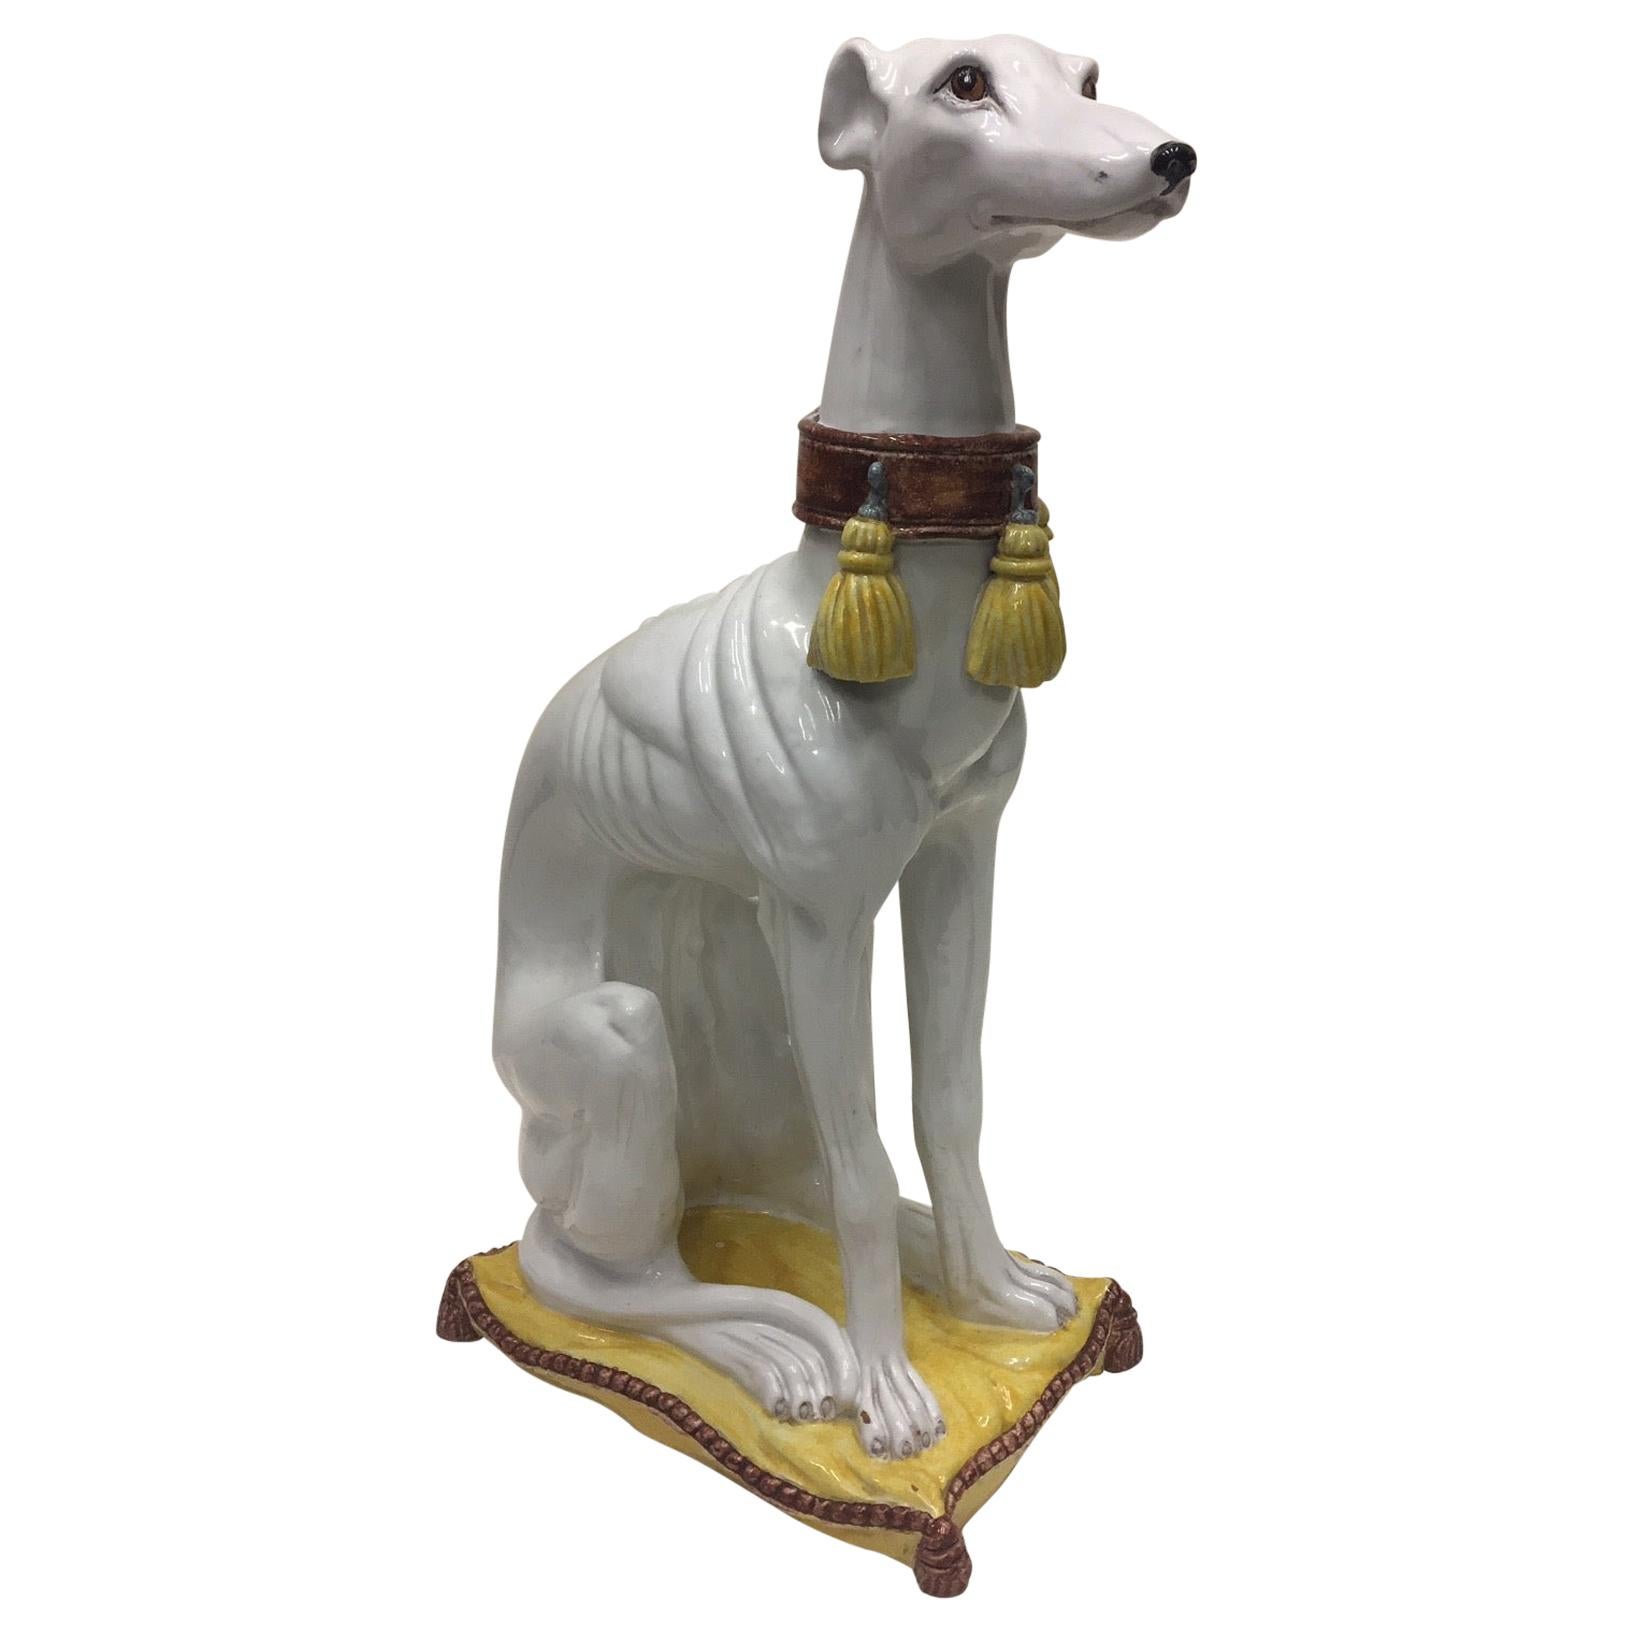 Enchanting Glazed Terracotta Greyhound Sculpture